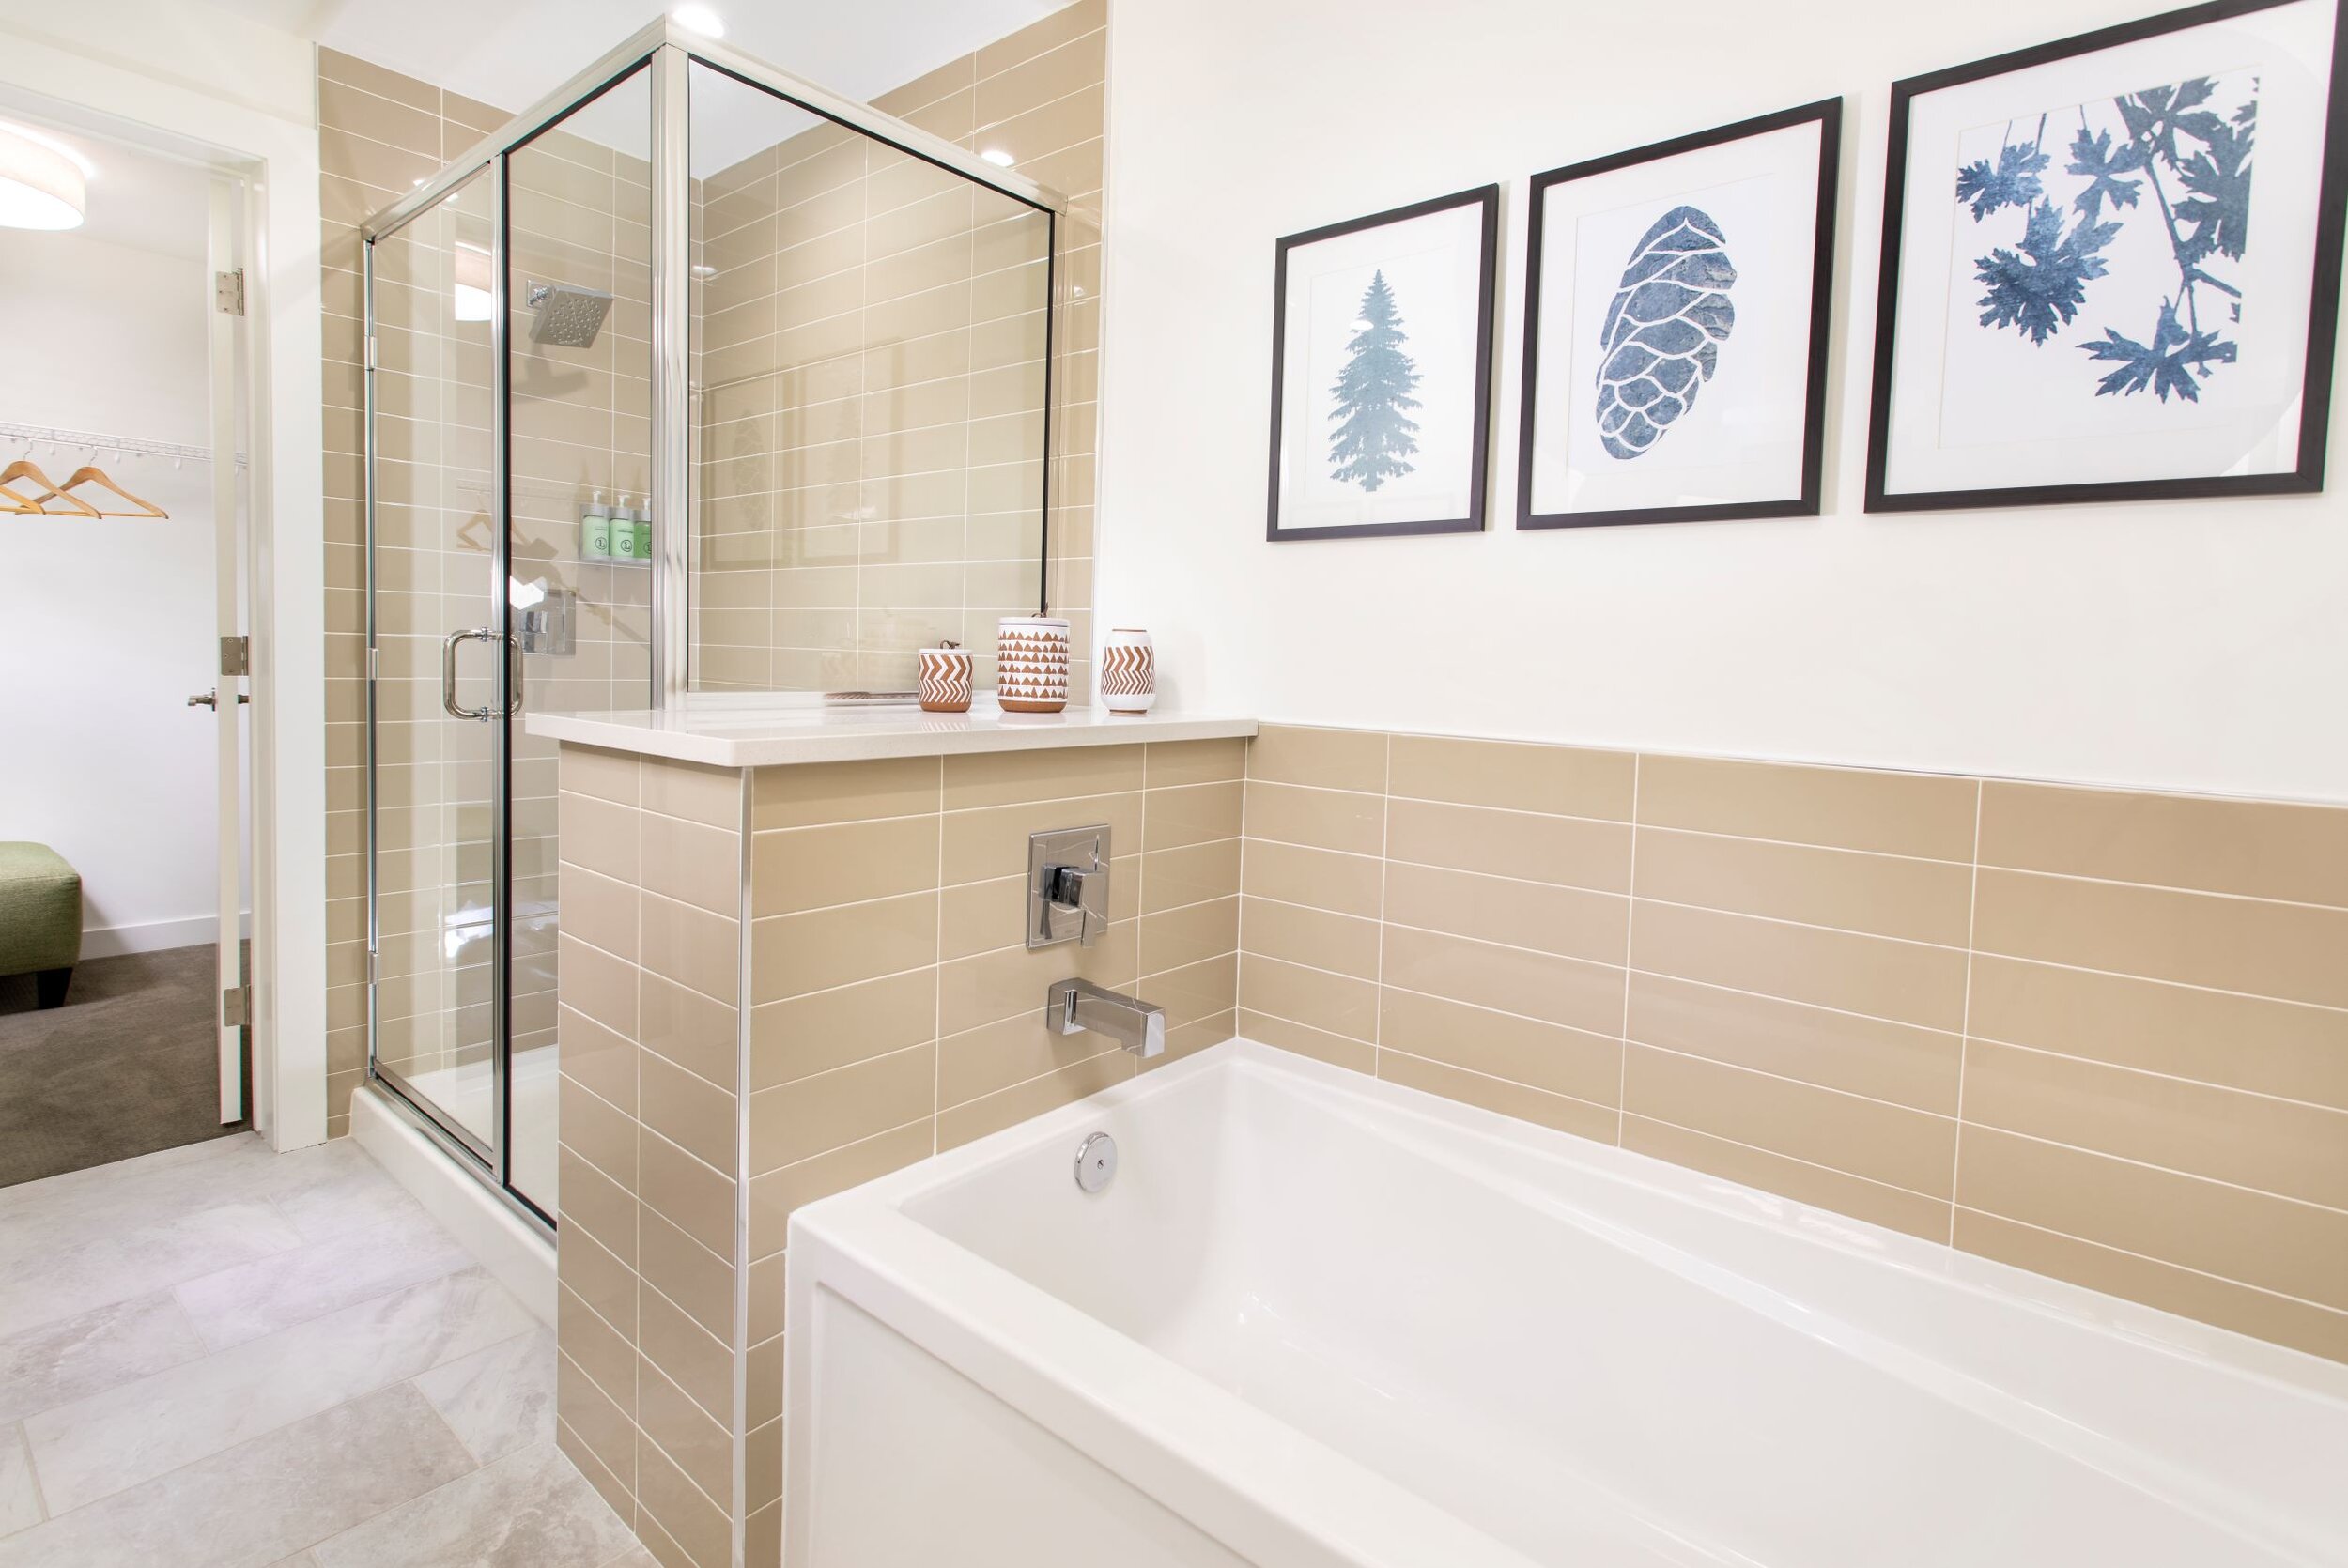 Premium 3 Bedroom Master Tub and Shower.jpg